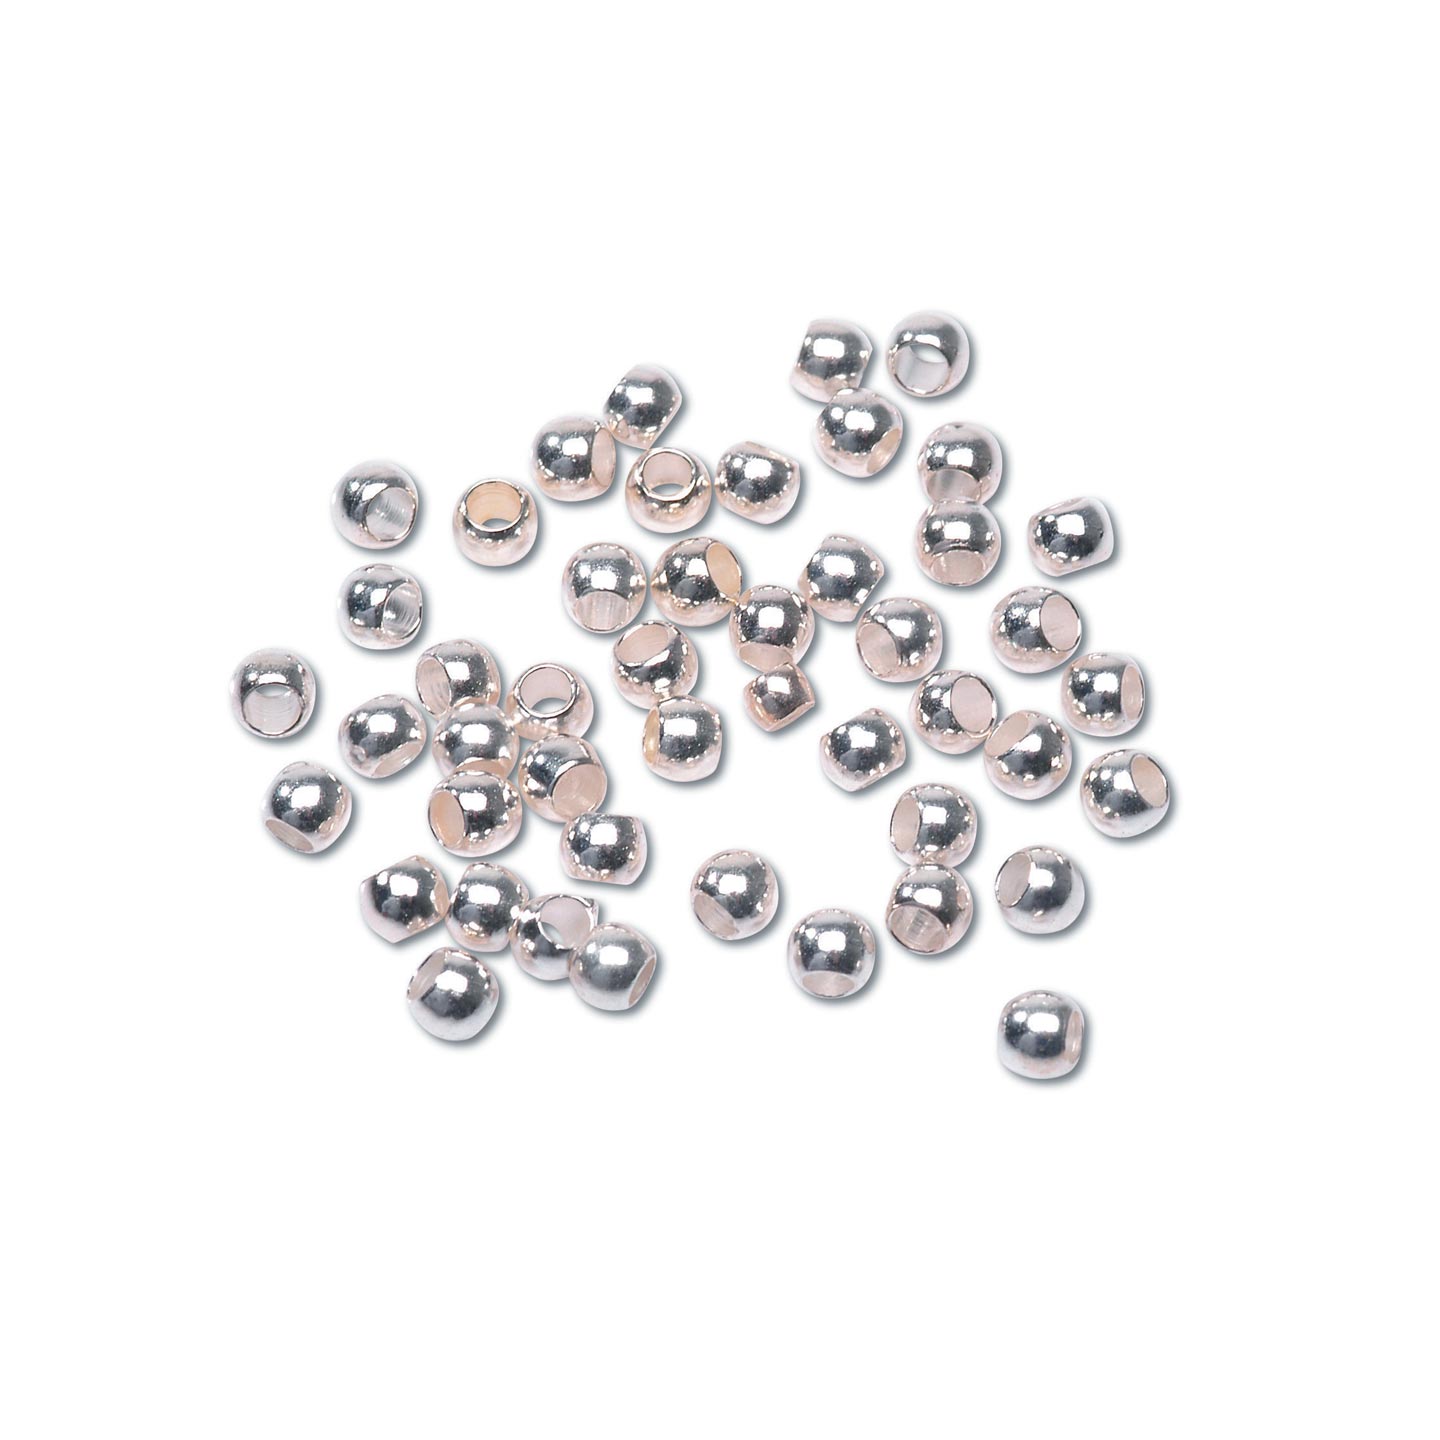 Jewelry Making Supplies - Crimp Beads